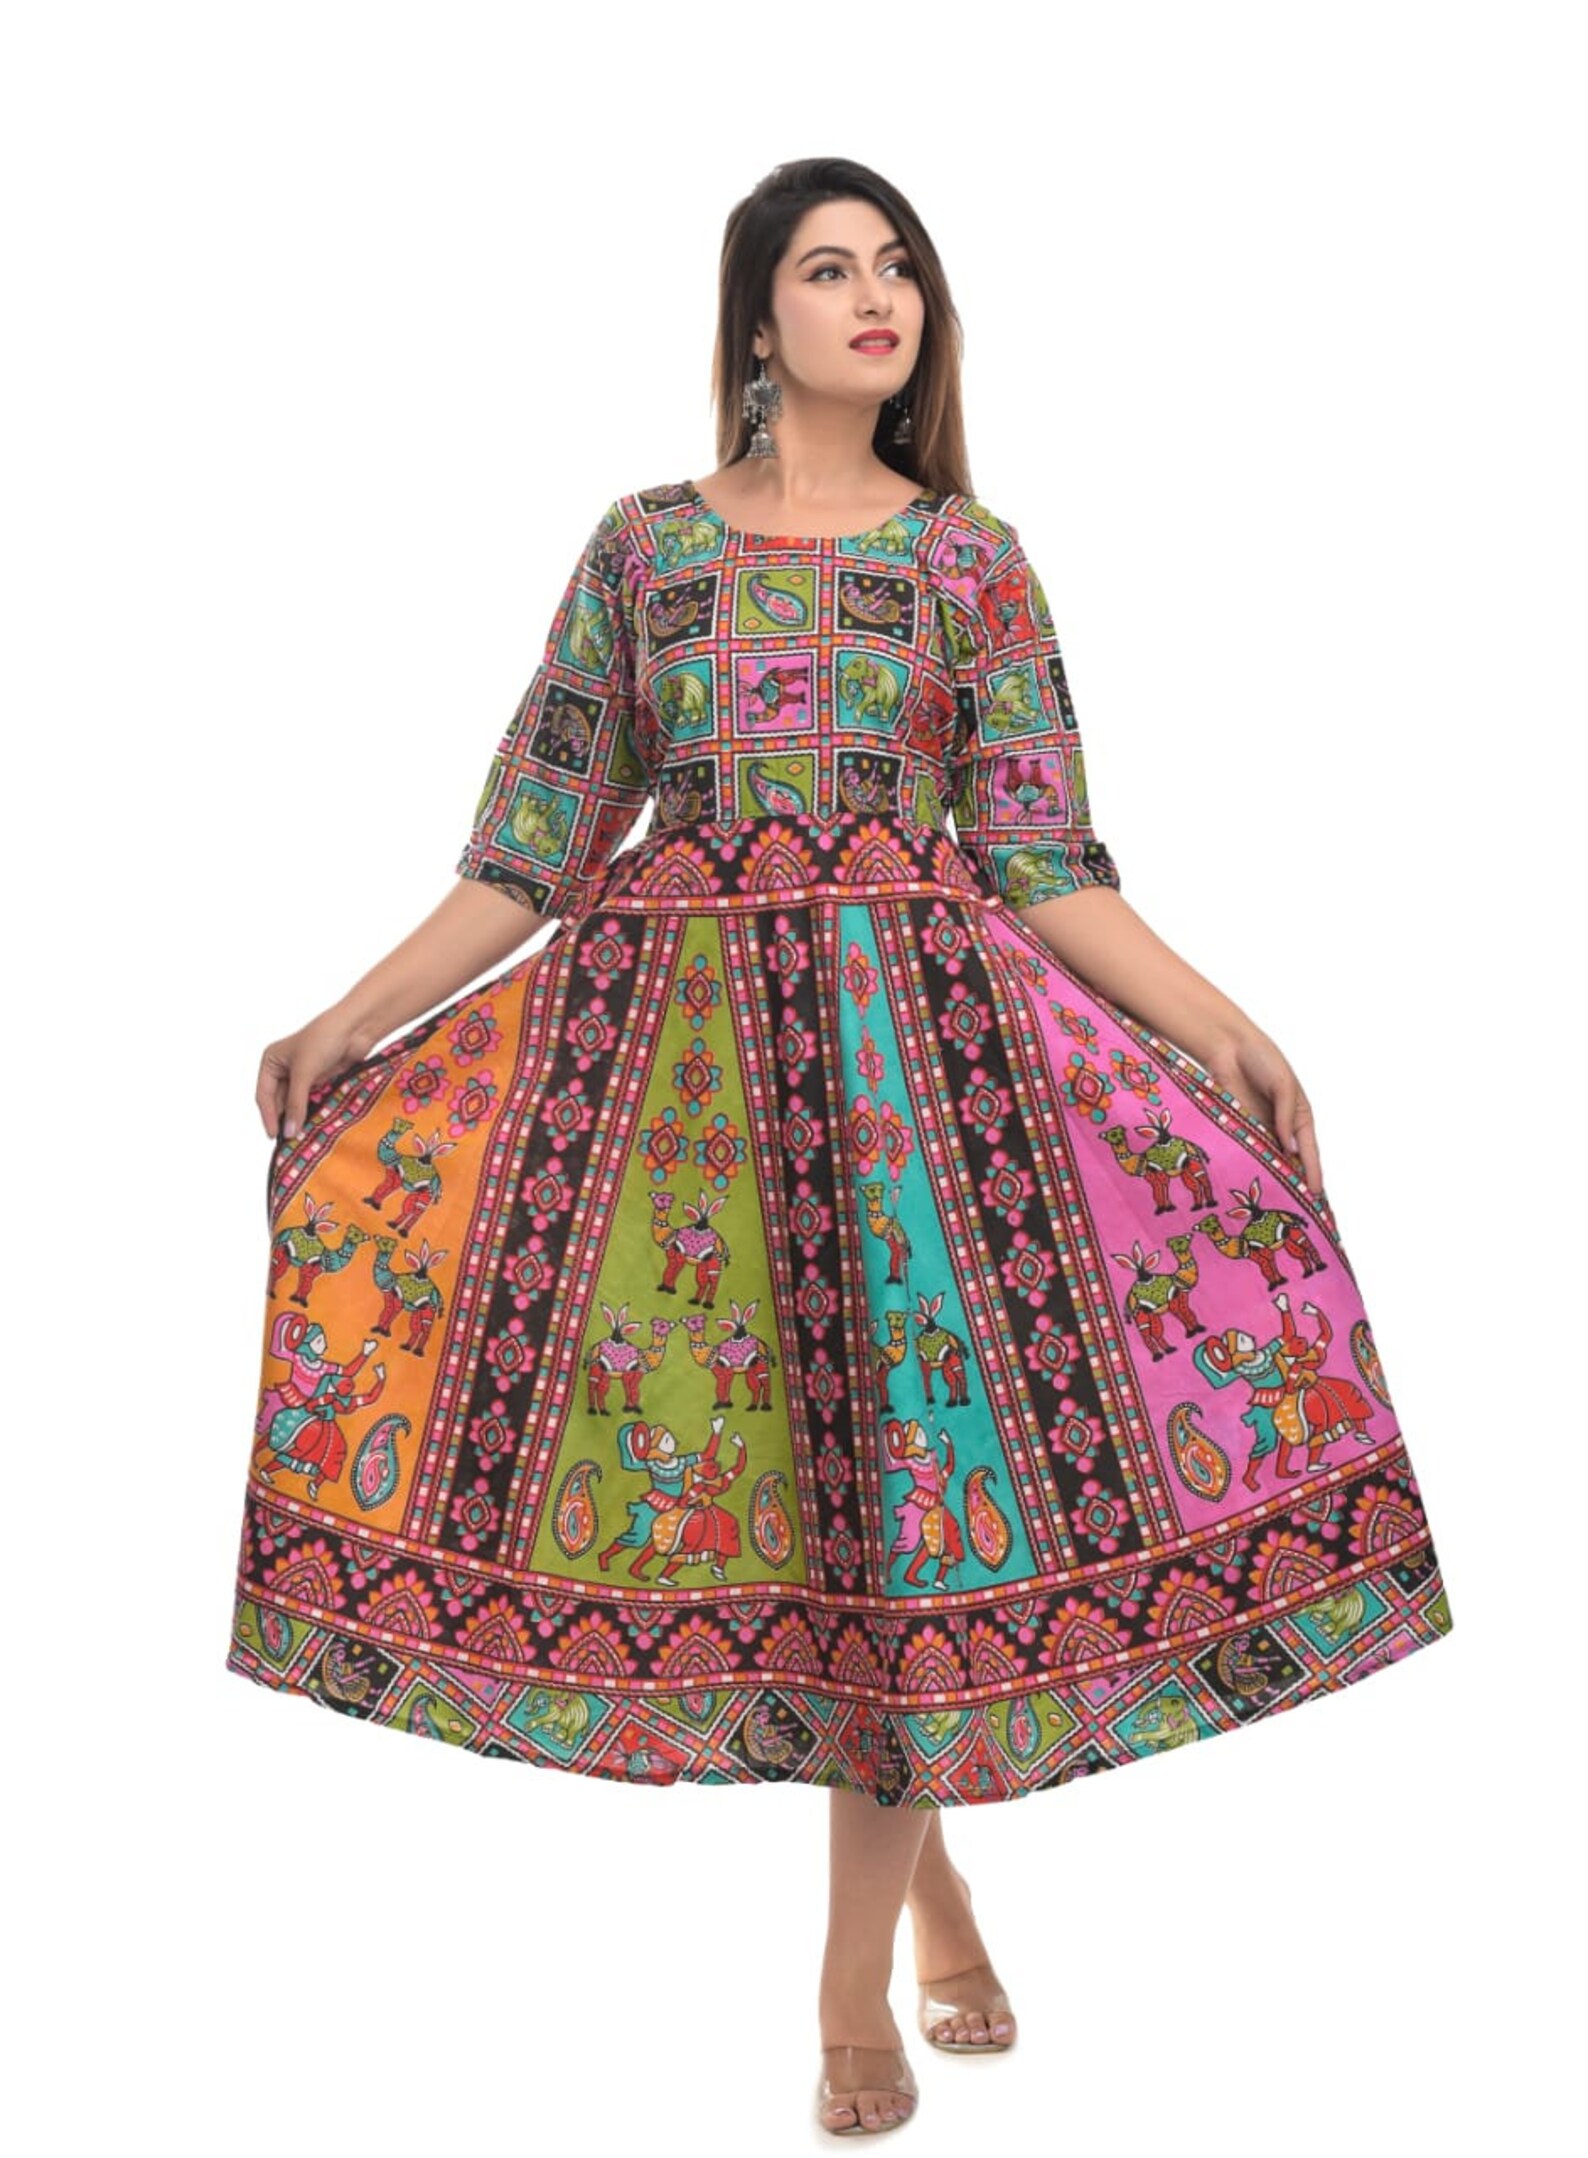 Indian Women Dress Maxi Long Bohemian Handmade Hippie Cotton | Etsy